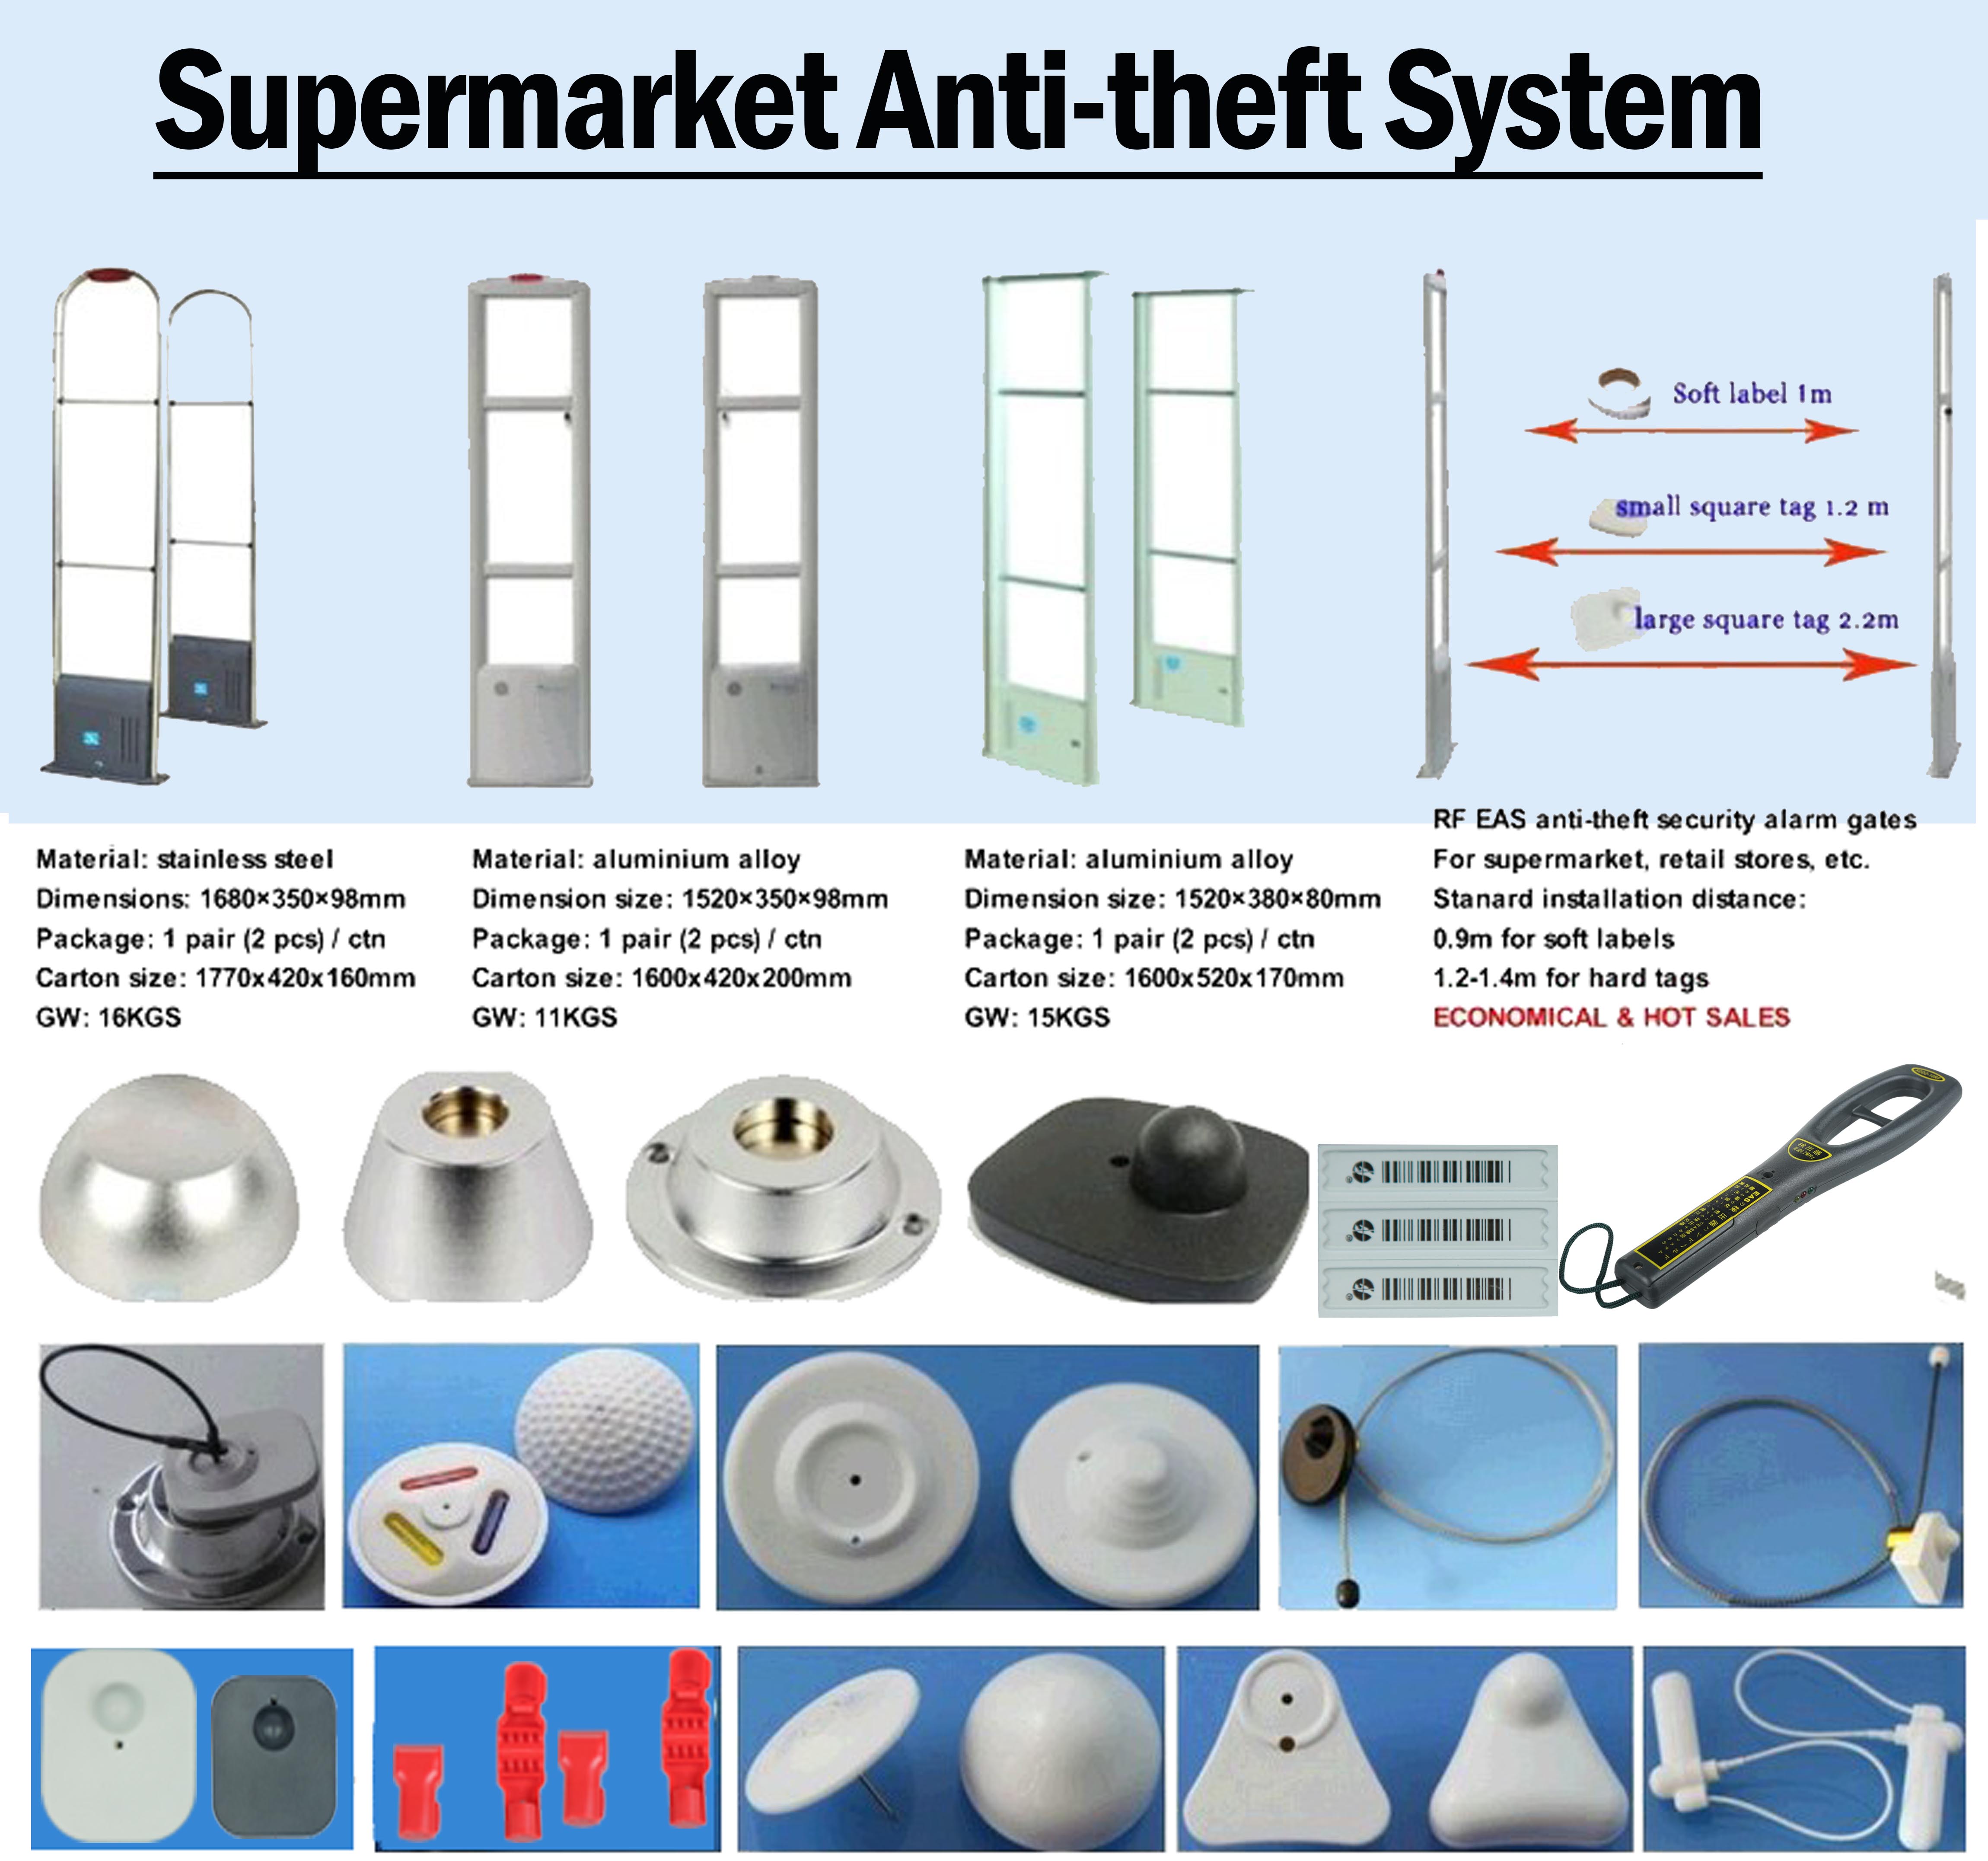 Supermarket Anti-theft System - Alarm